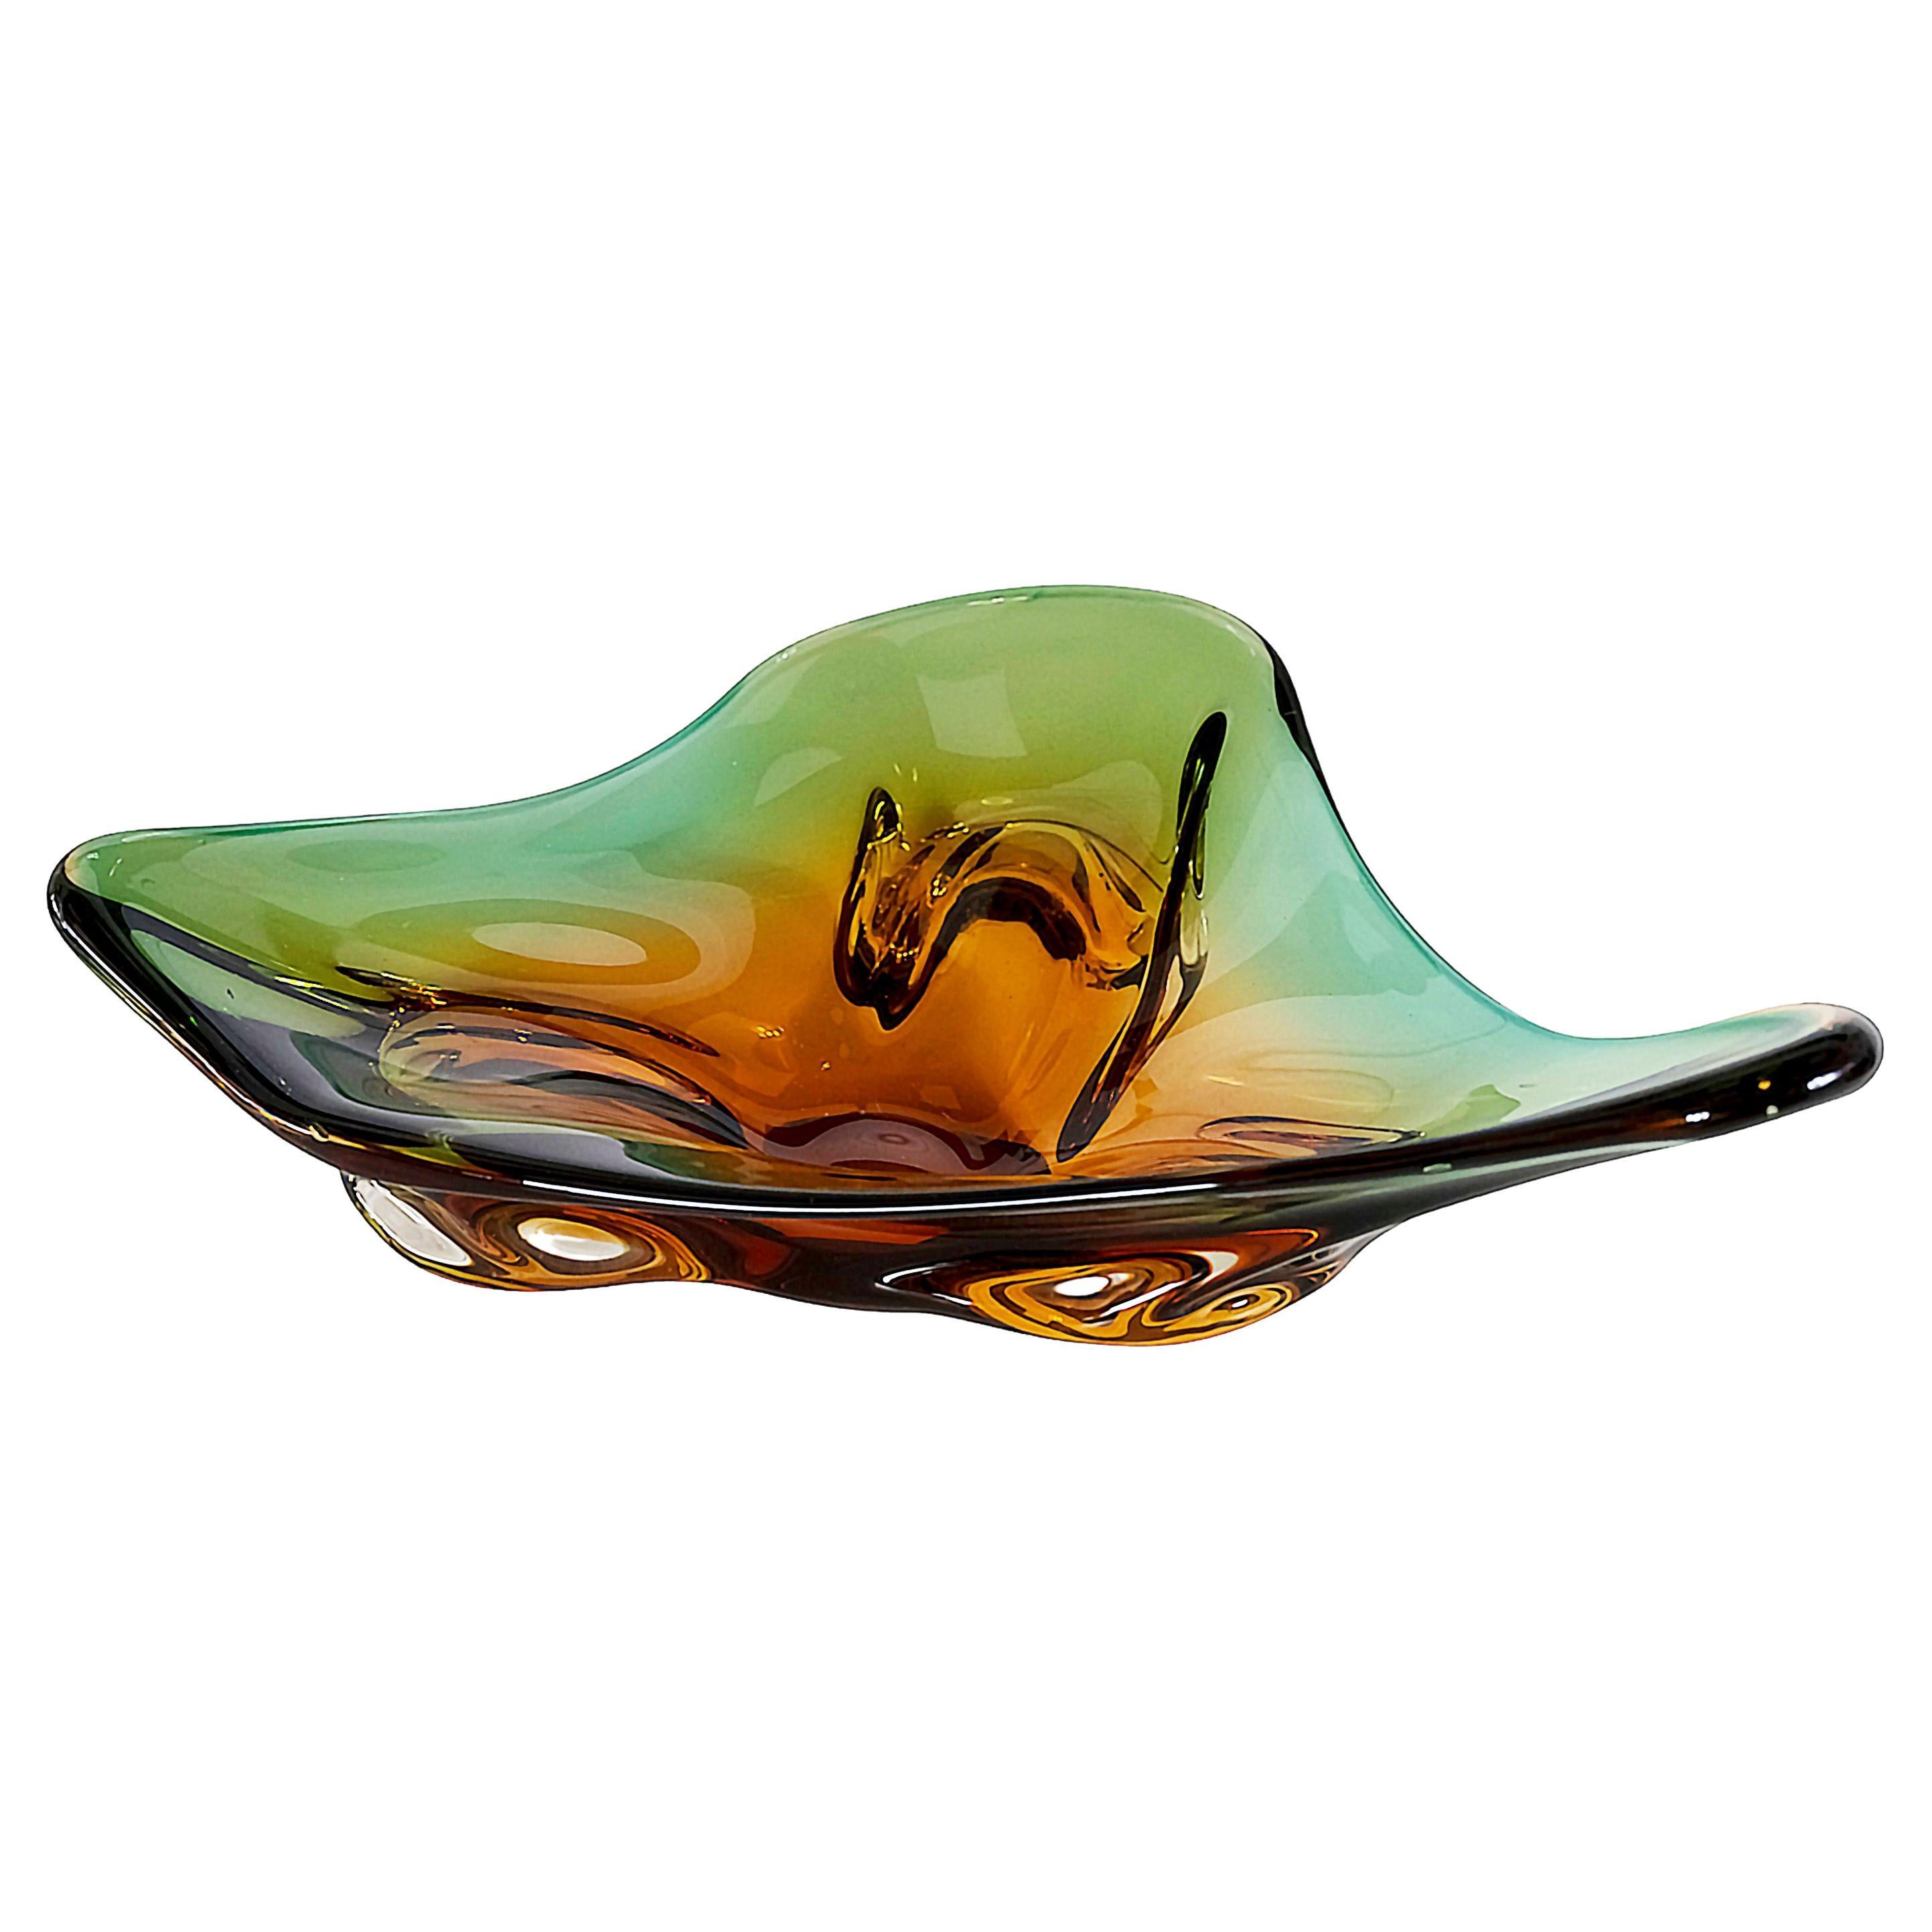 Vintage Italian Handmade Murano Glass Vase / Centerpiece